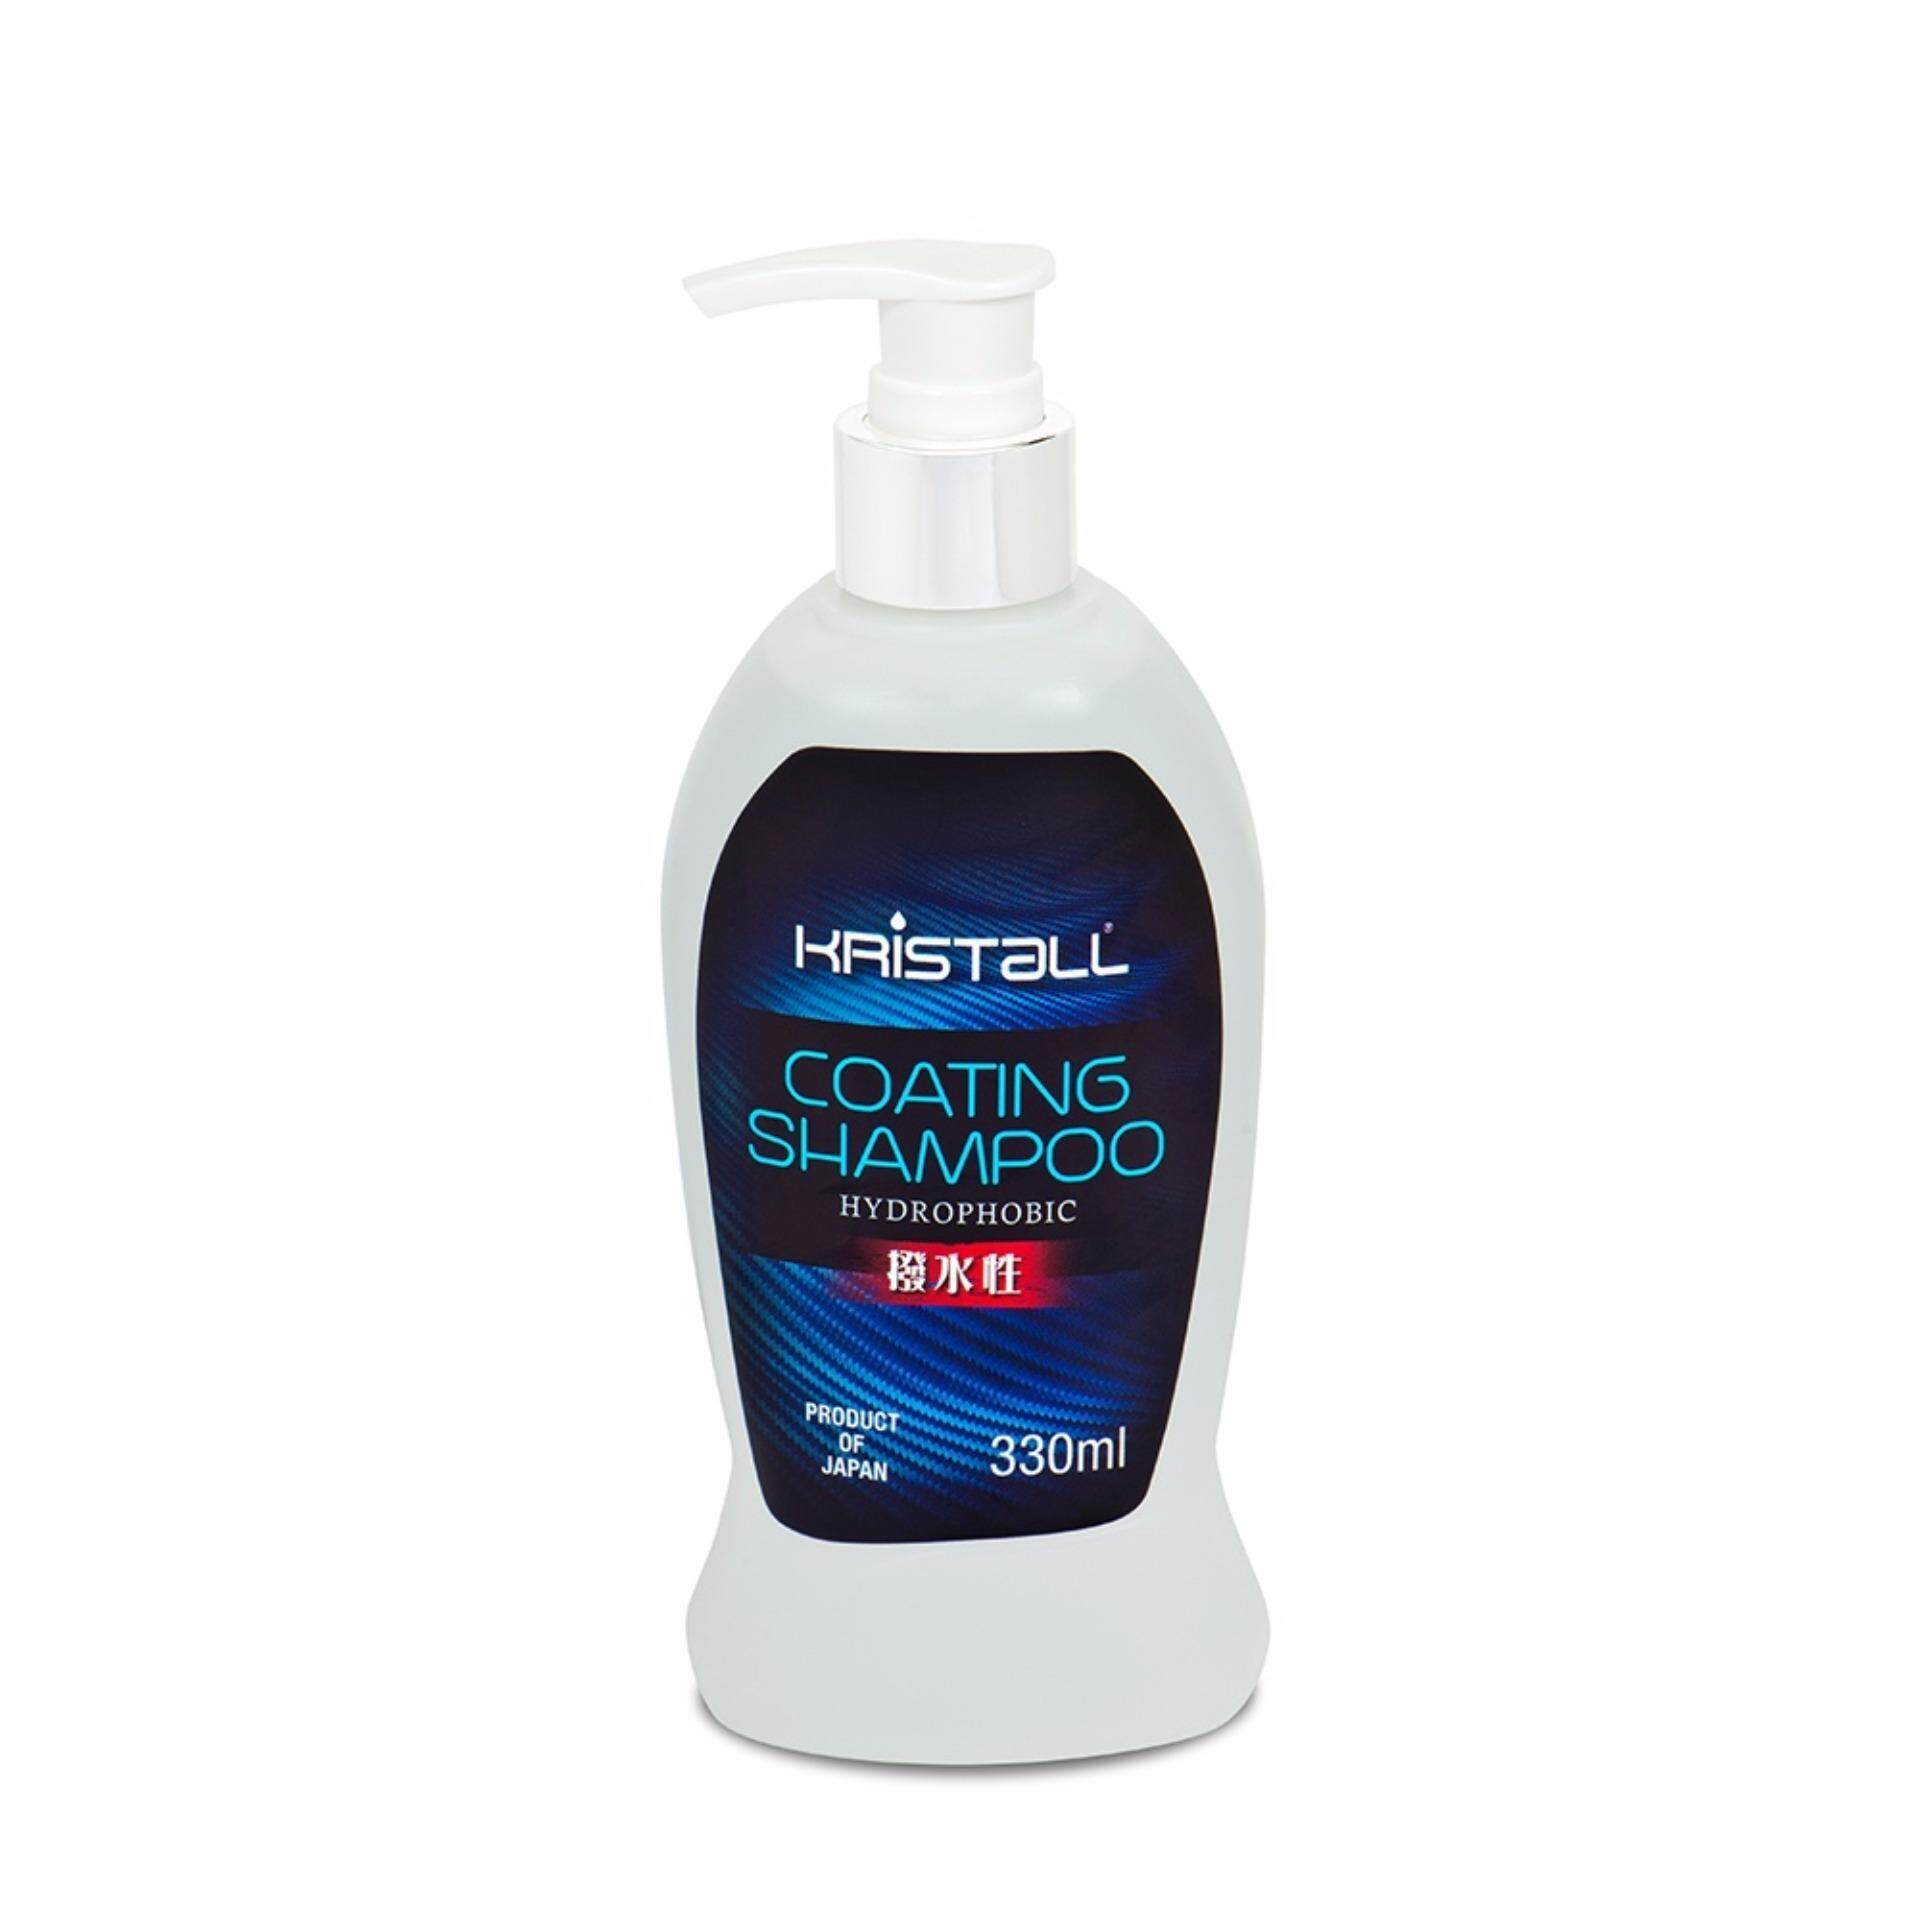 Ferrari 812 Superfast Coating Shampoo - Kristall® Car Shampoo WITH Nano Coating (Car Paint Protection, Super Hydrophobic, Deep Gloss, 6.5 pH Balanced Neutral Shampoo)